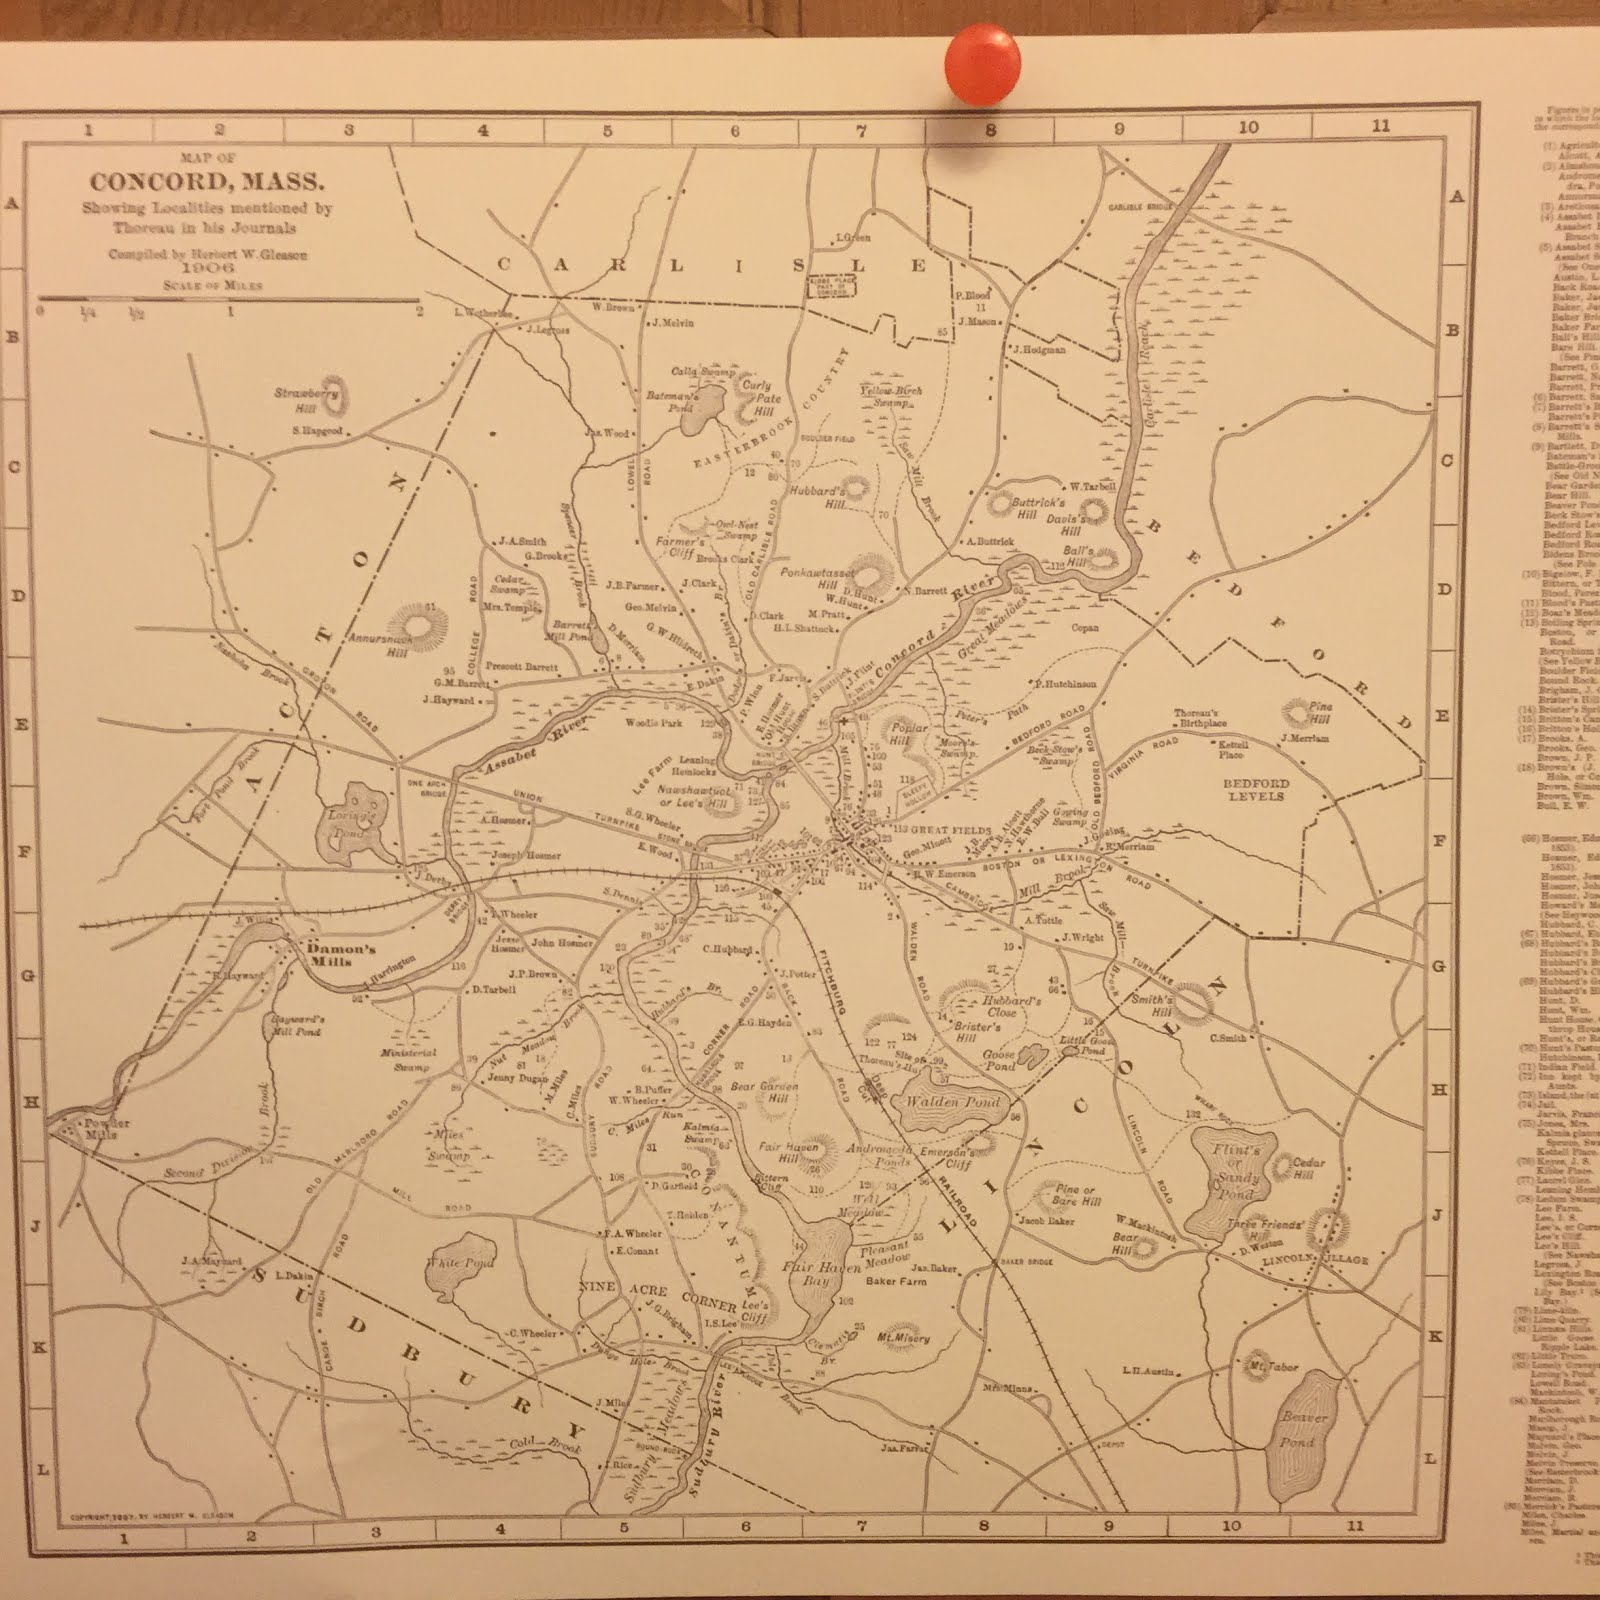 Gleason 1906 Map of Concord